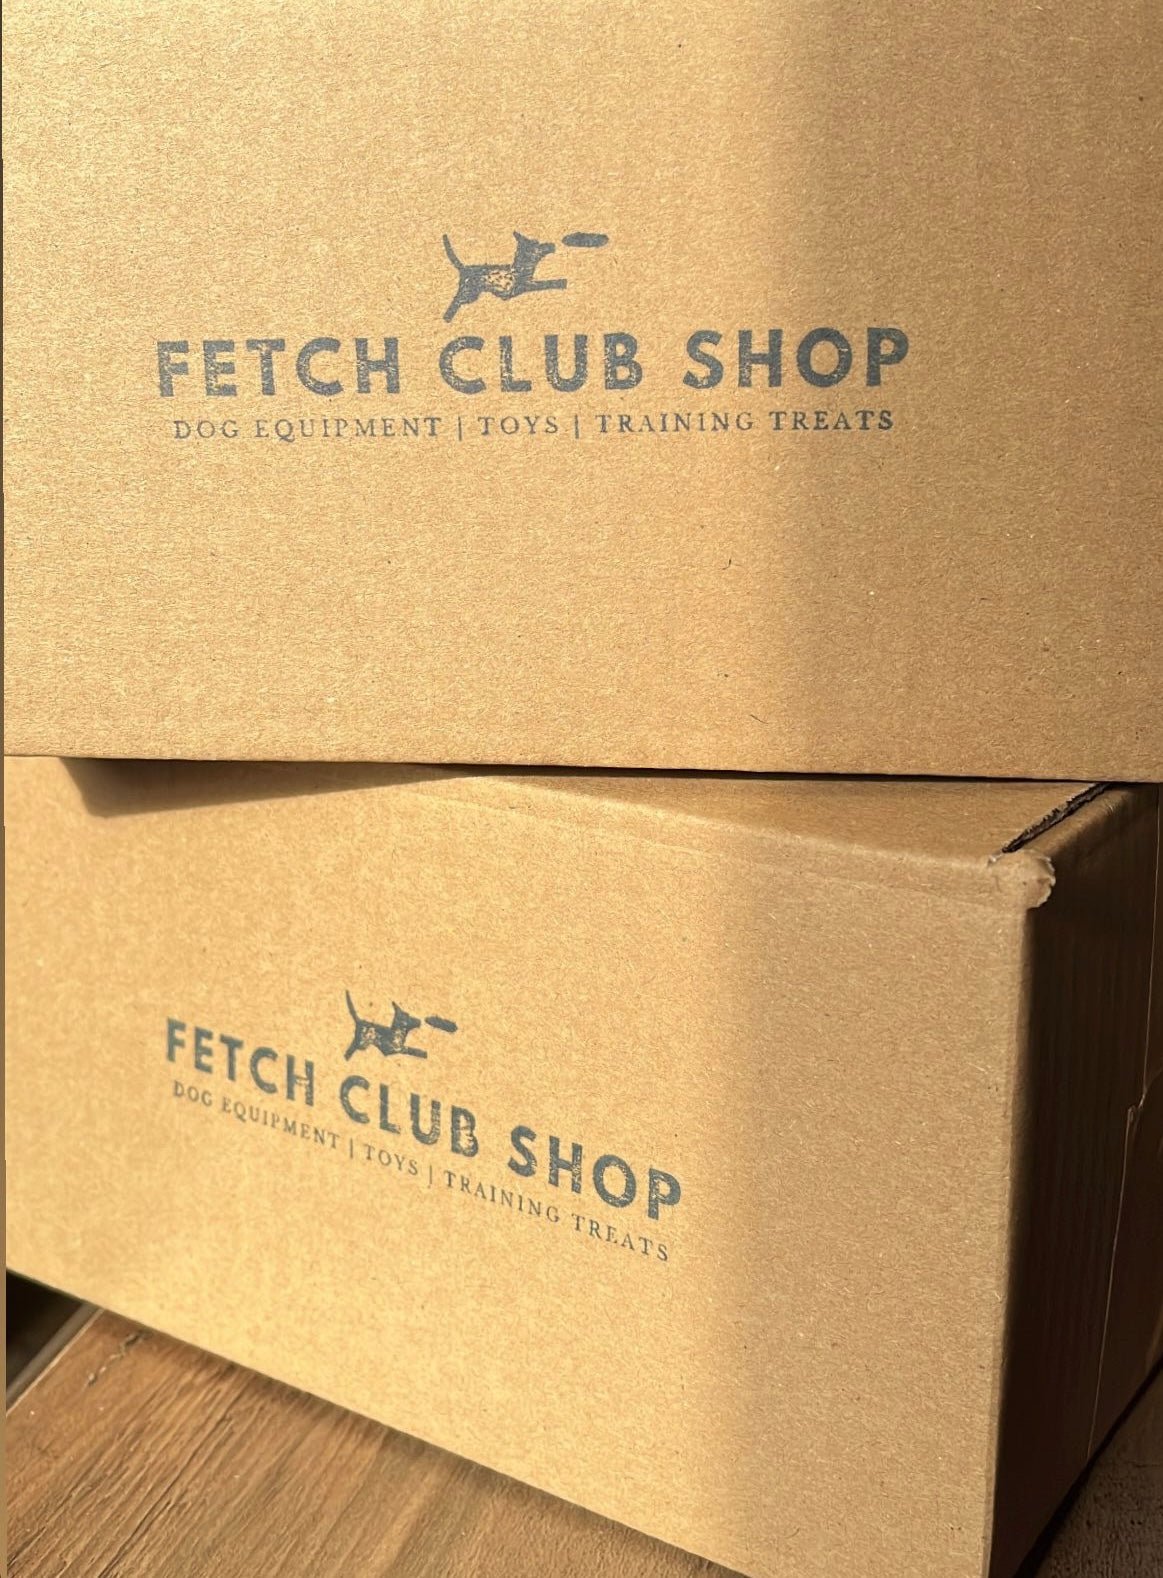 Treat box for puppies - Fetch Club Shop